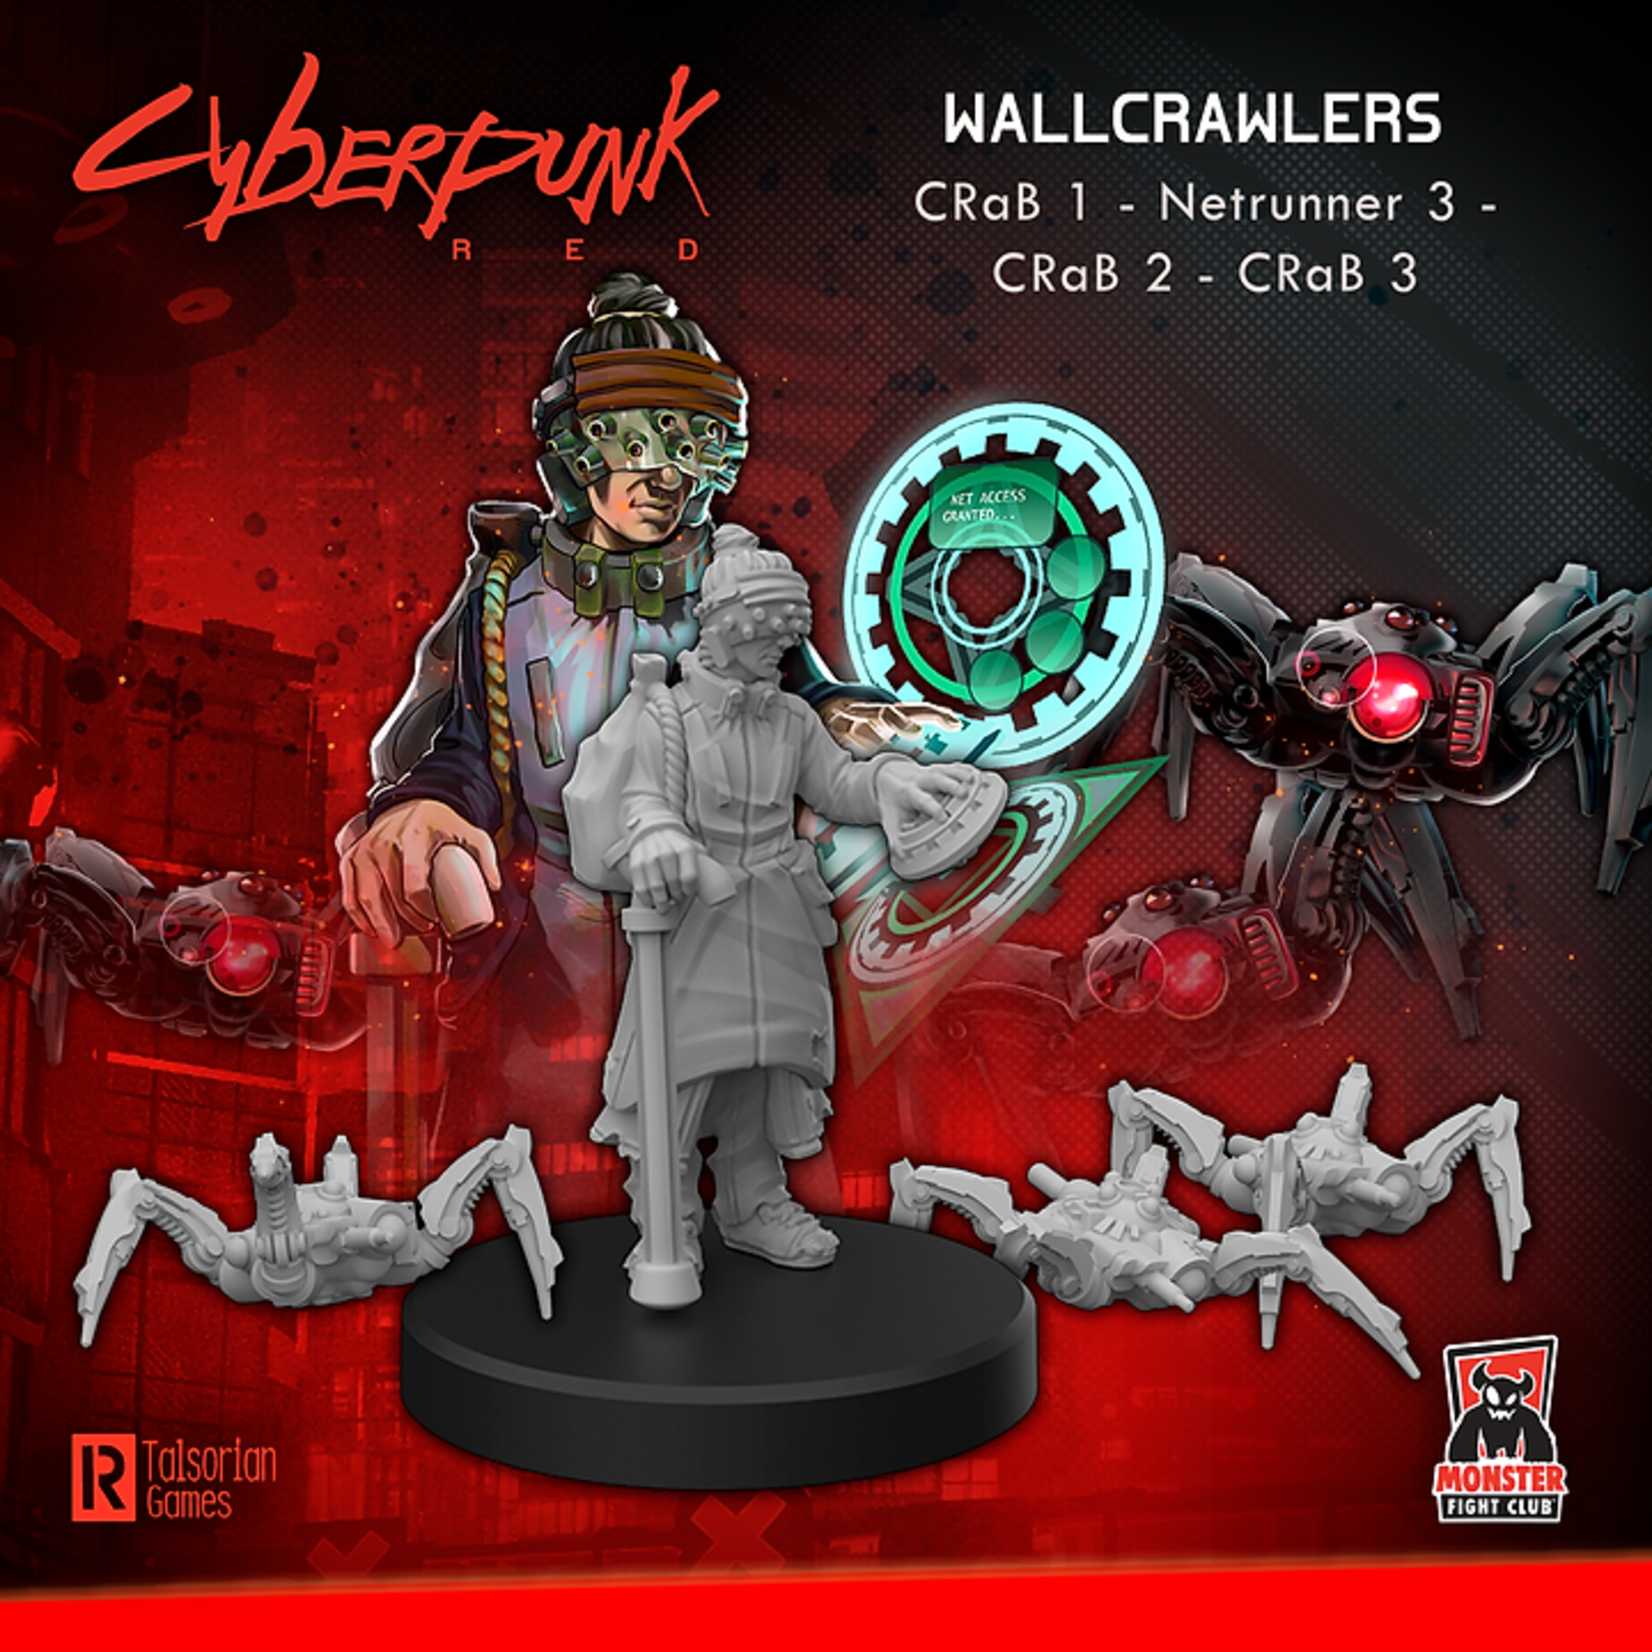 Monster Fight Club Cyberpunk Red: Wall Crawlers